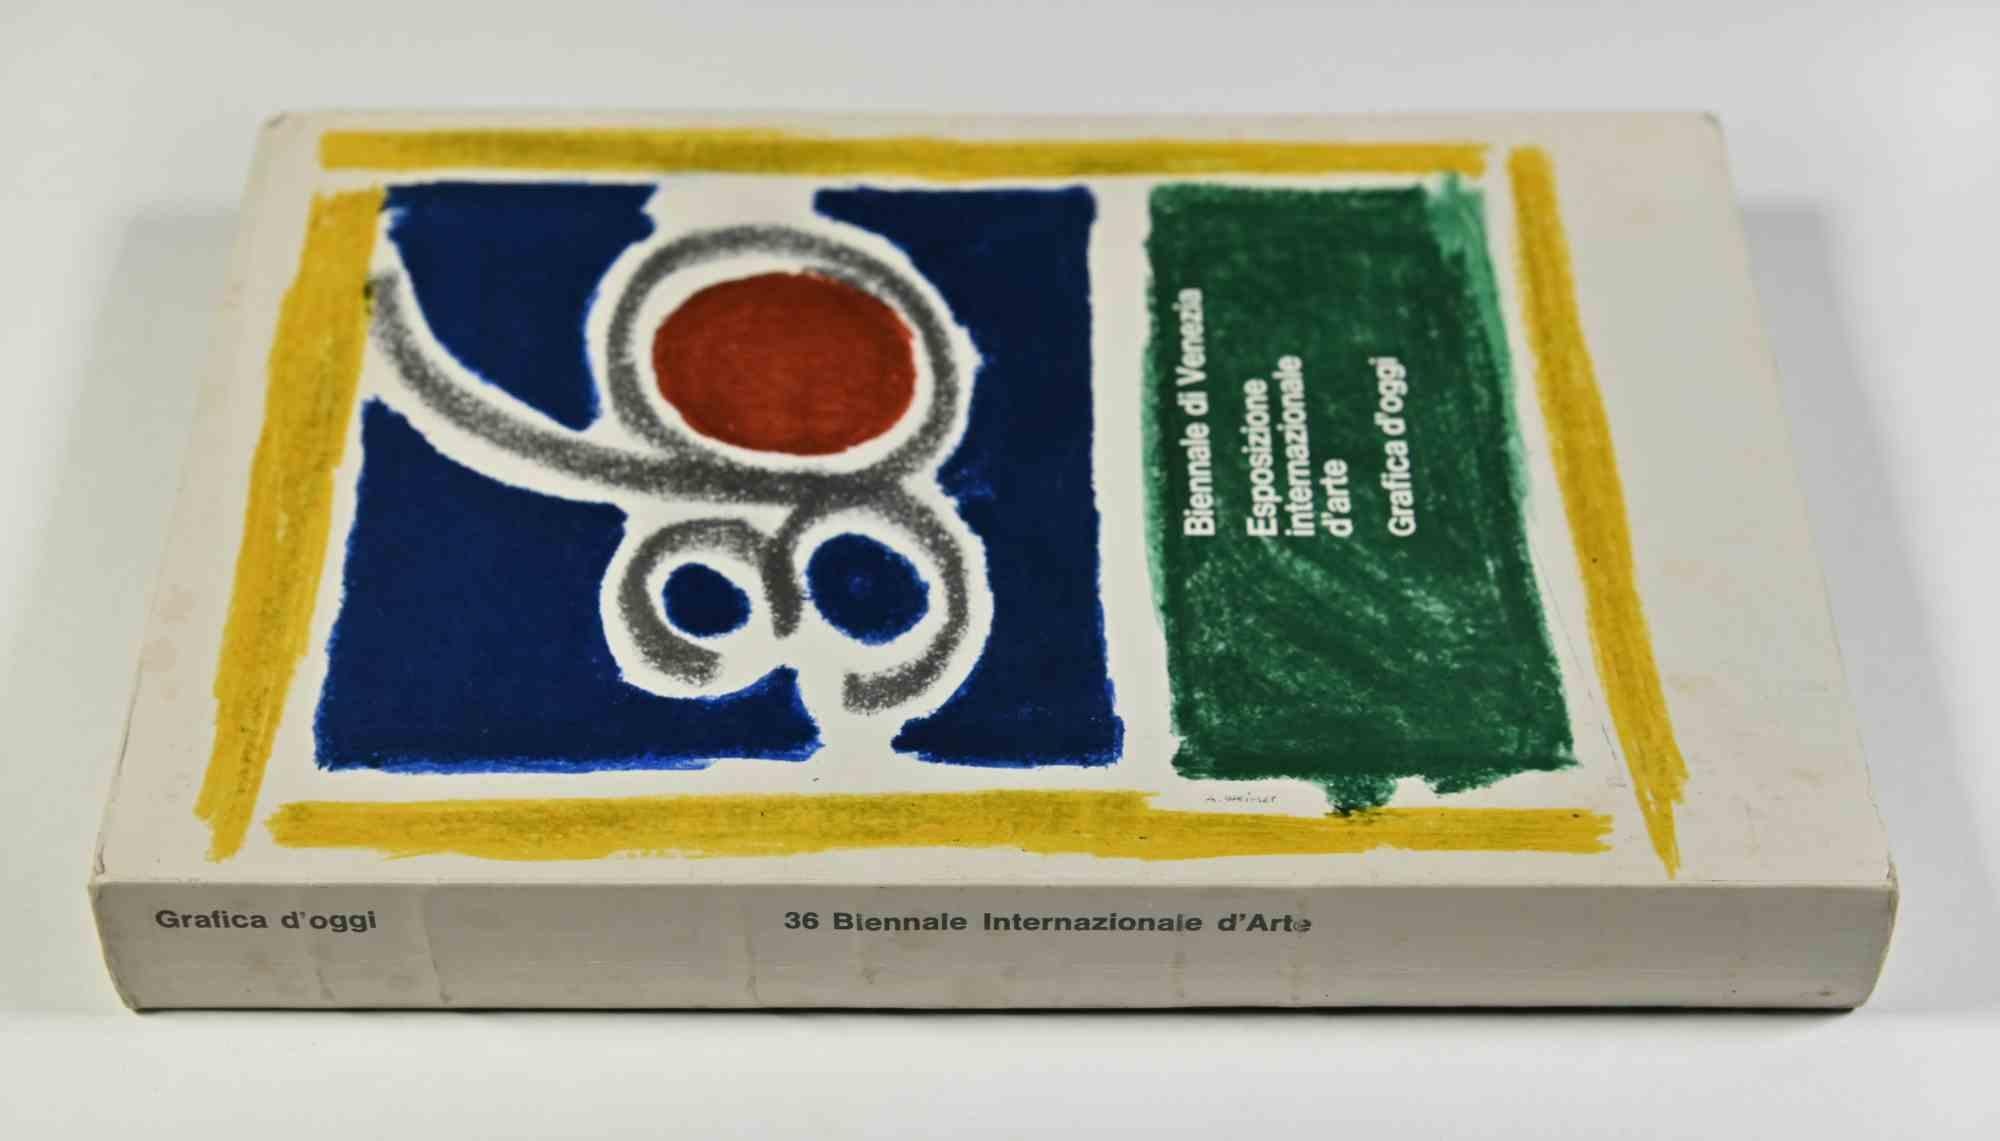 Venice Biennale - International Art Exhibition - Rare Book - 1972 For Sale 1